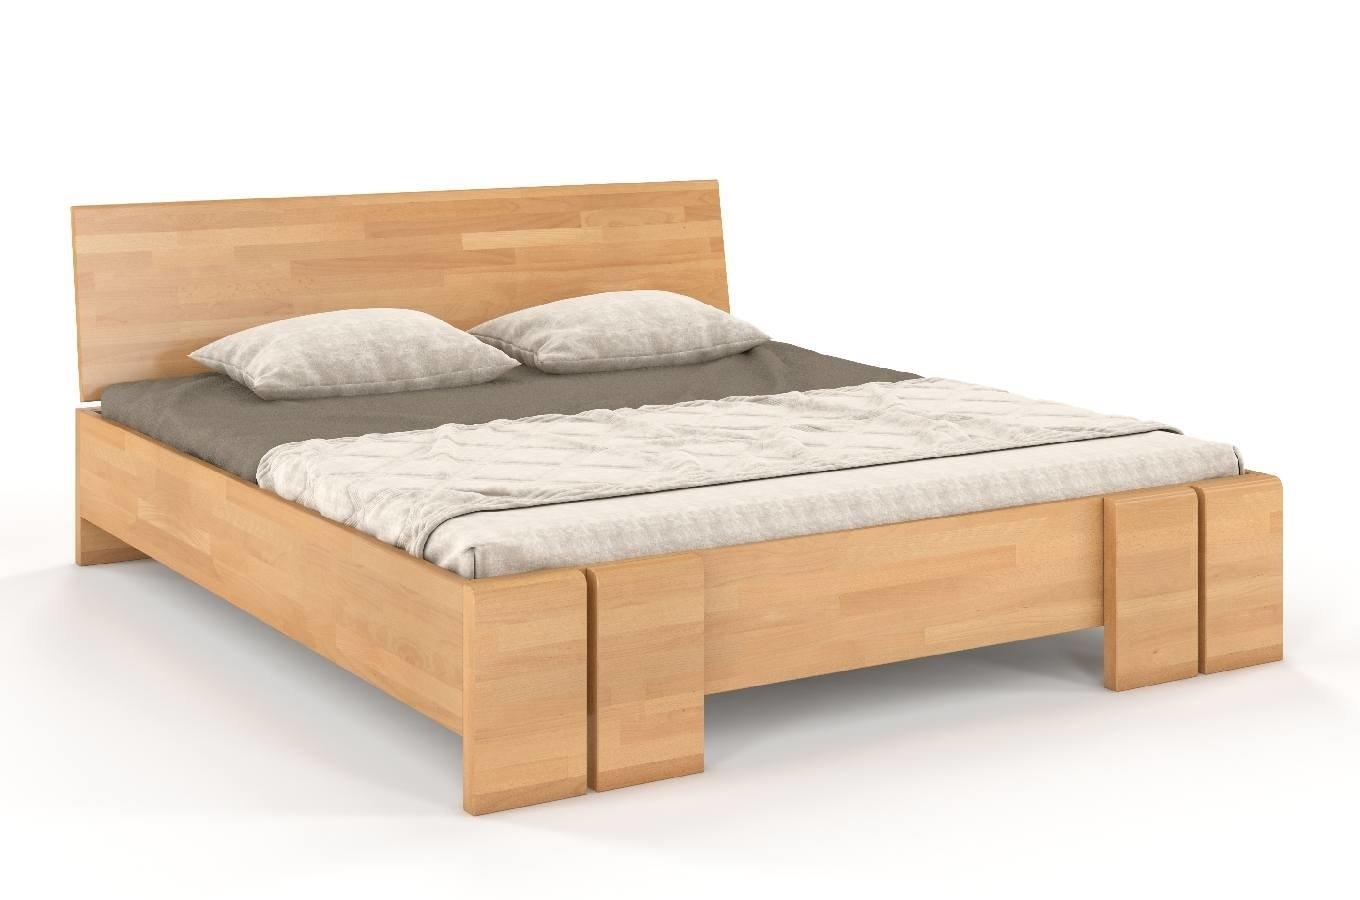 Łóżko drewniane bukowe Skandica VESTRE Maxi / 120x200 cm, kolor naturalny